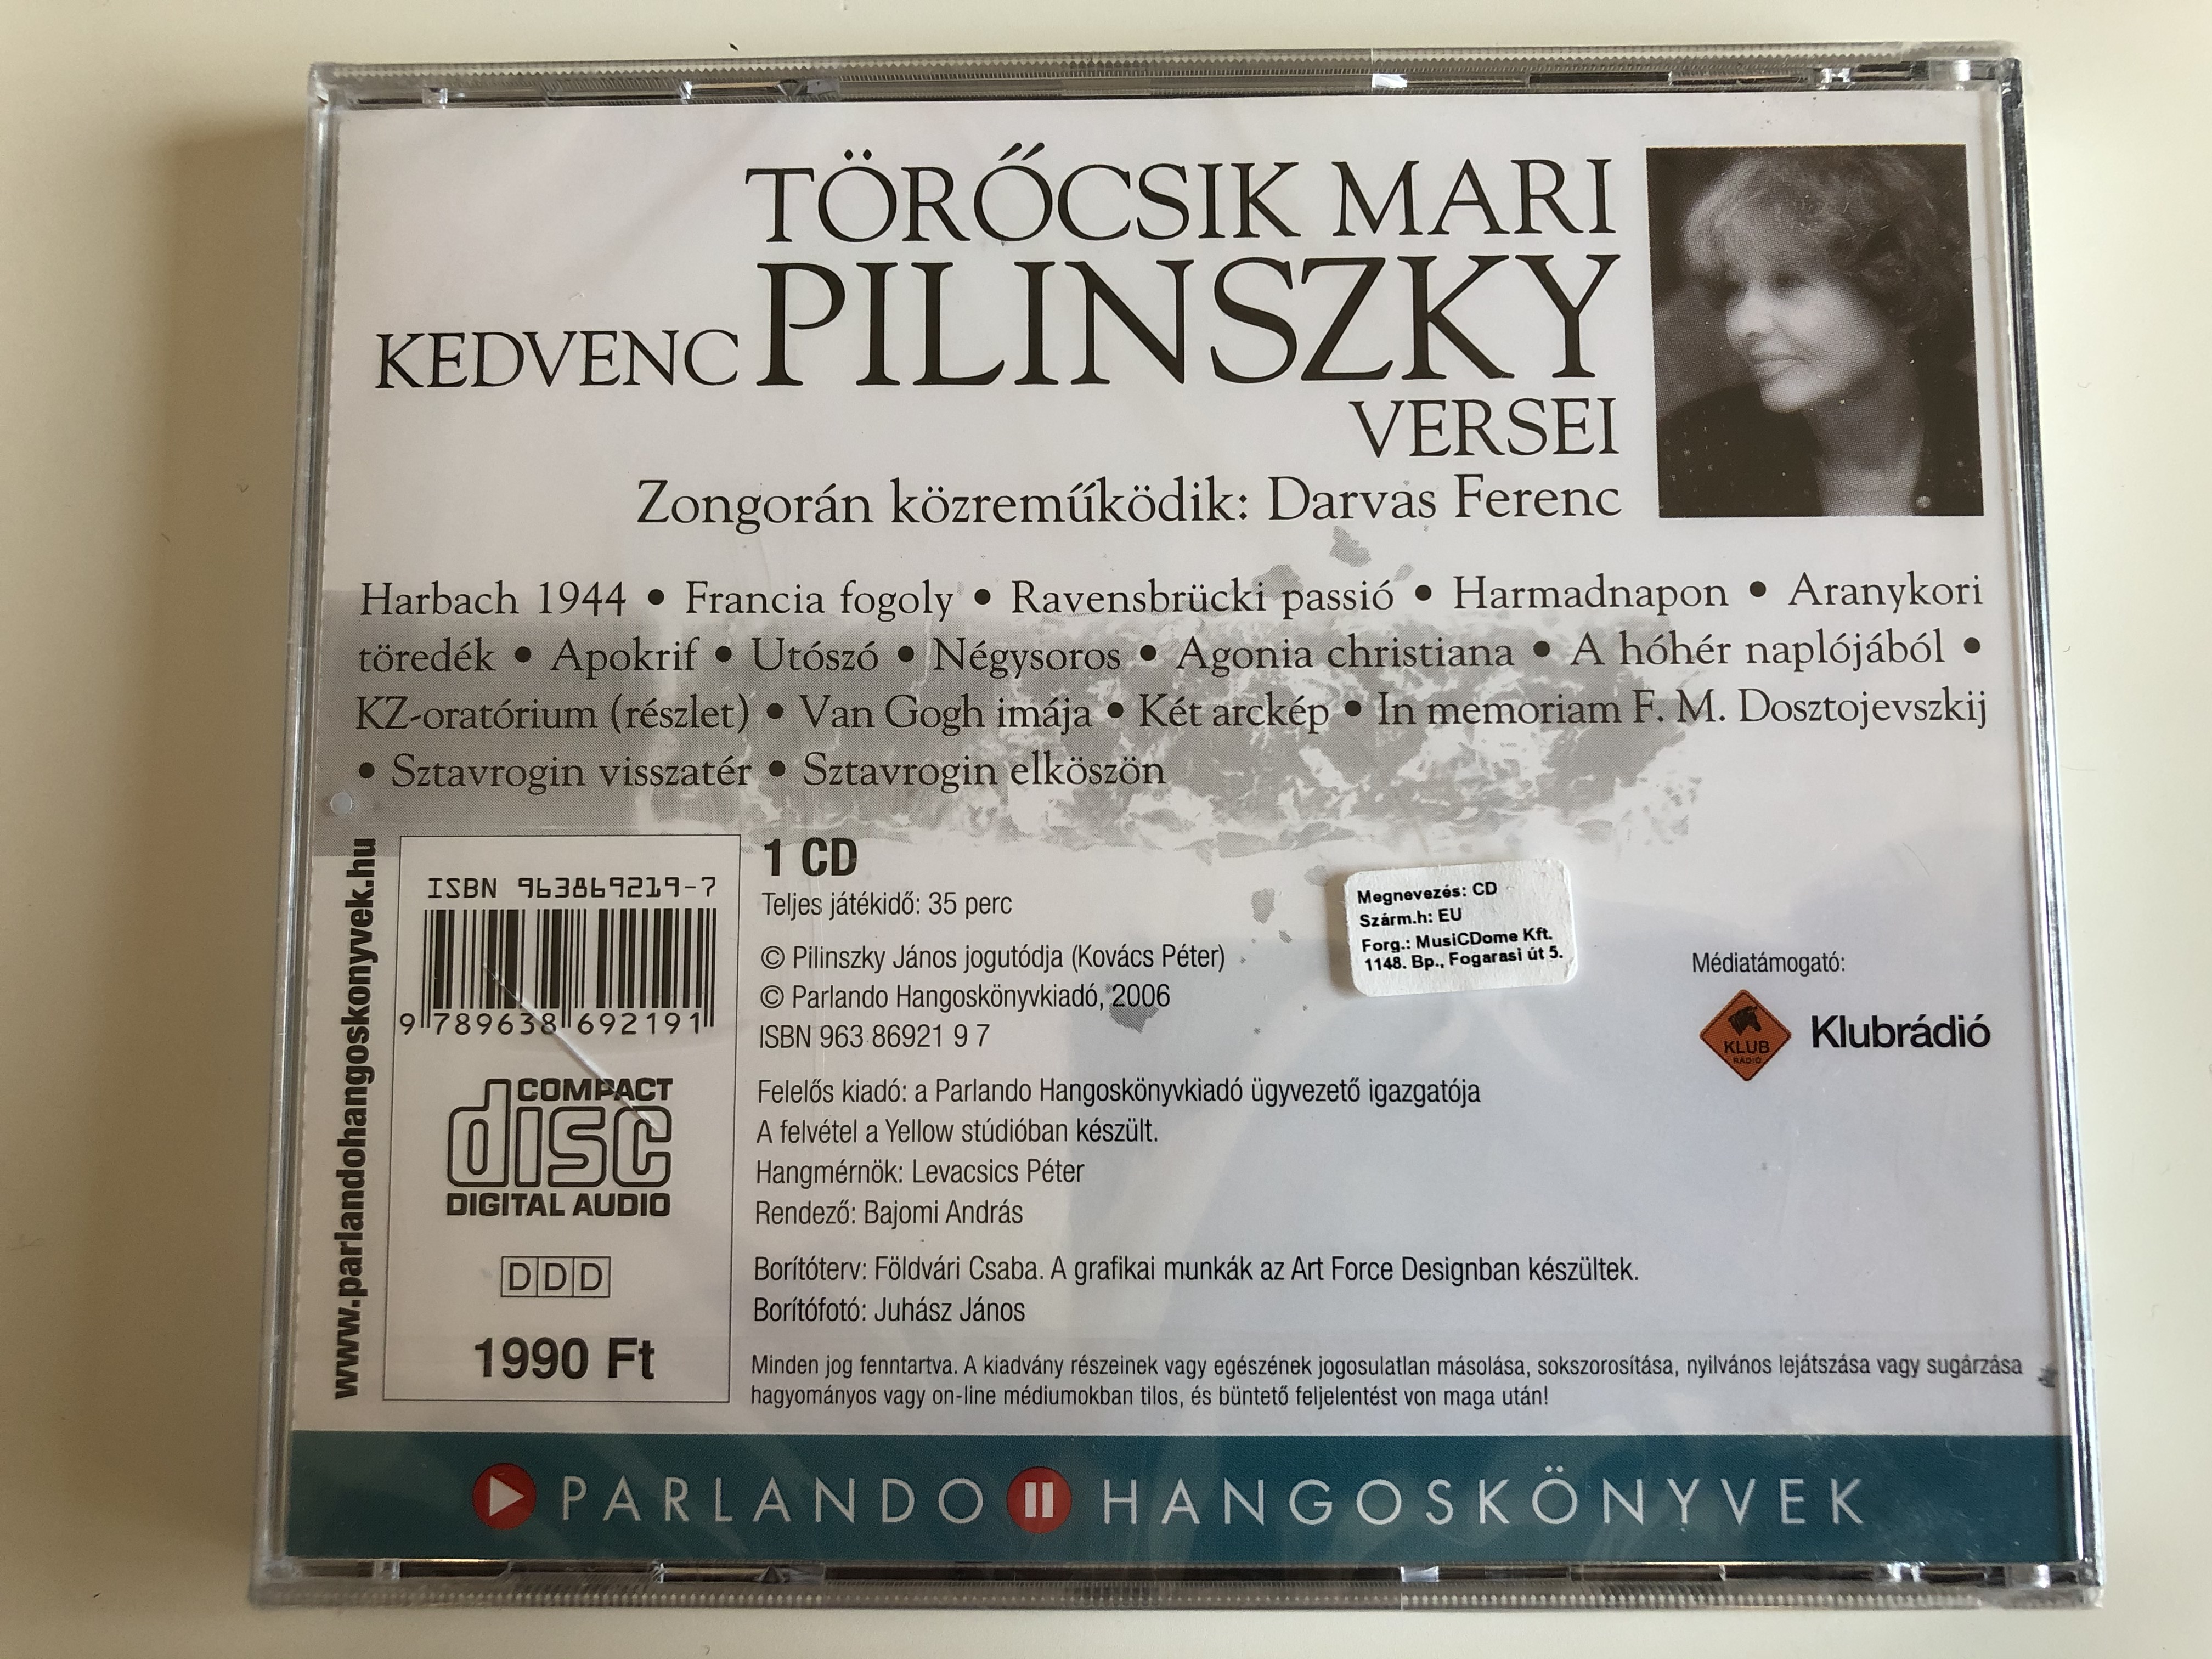 t-r-csik-mari-kedvenc-pilinszky-versei-parlando-hangosk-nyvkiad-audio-cd-2006-isbn-963869219-7-2-.jpg